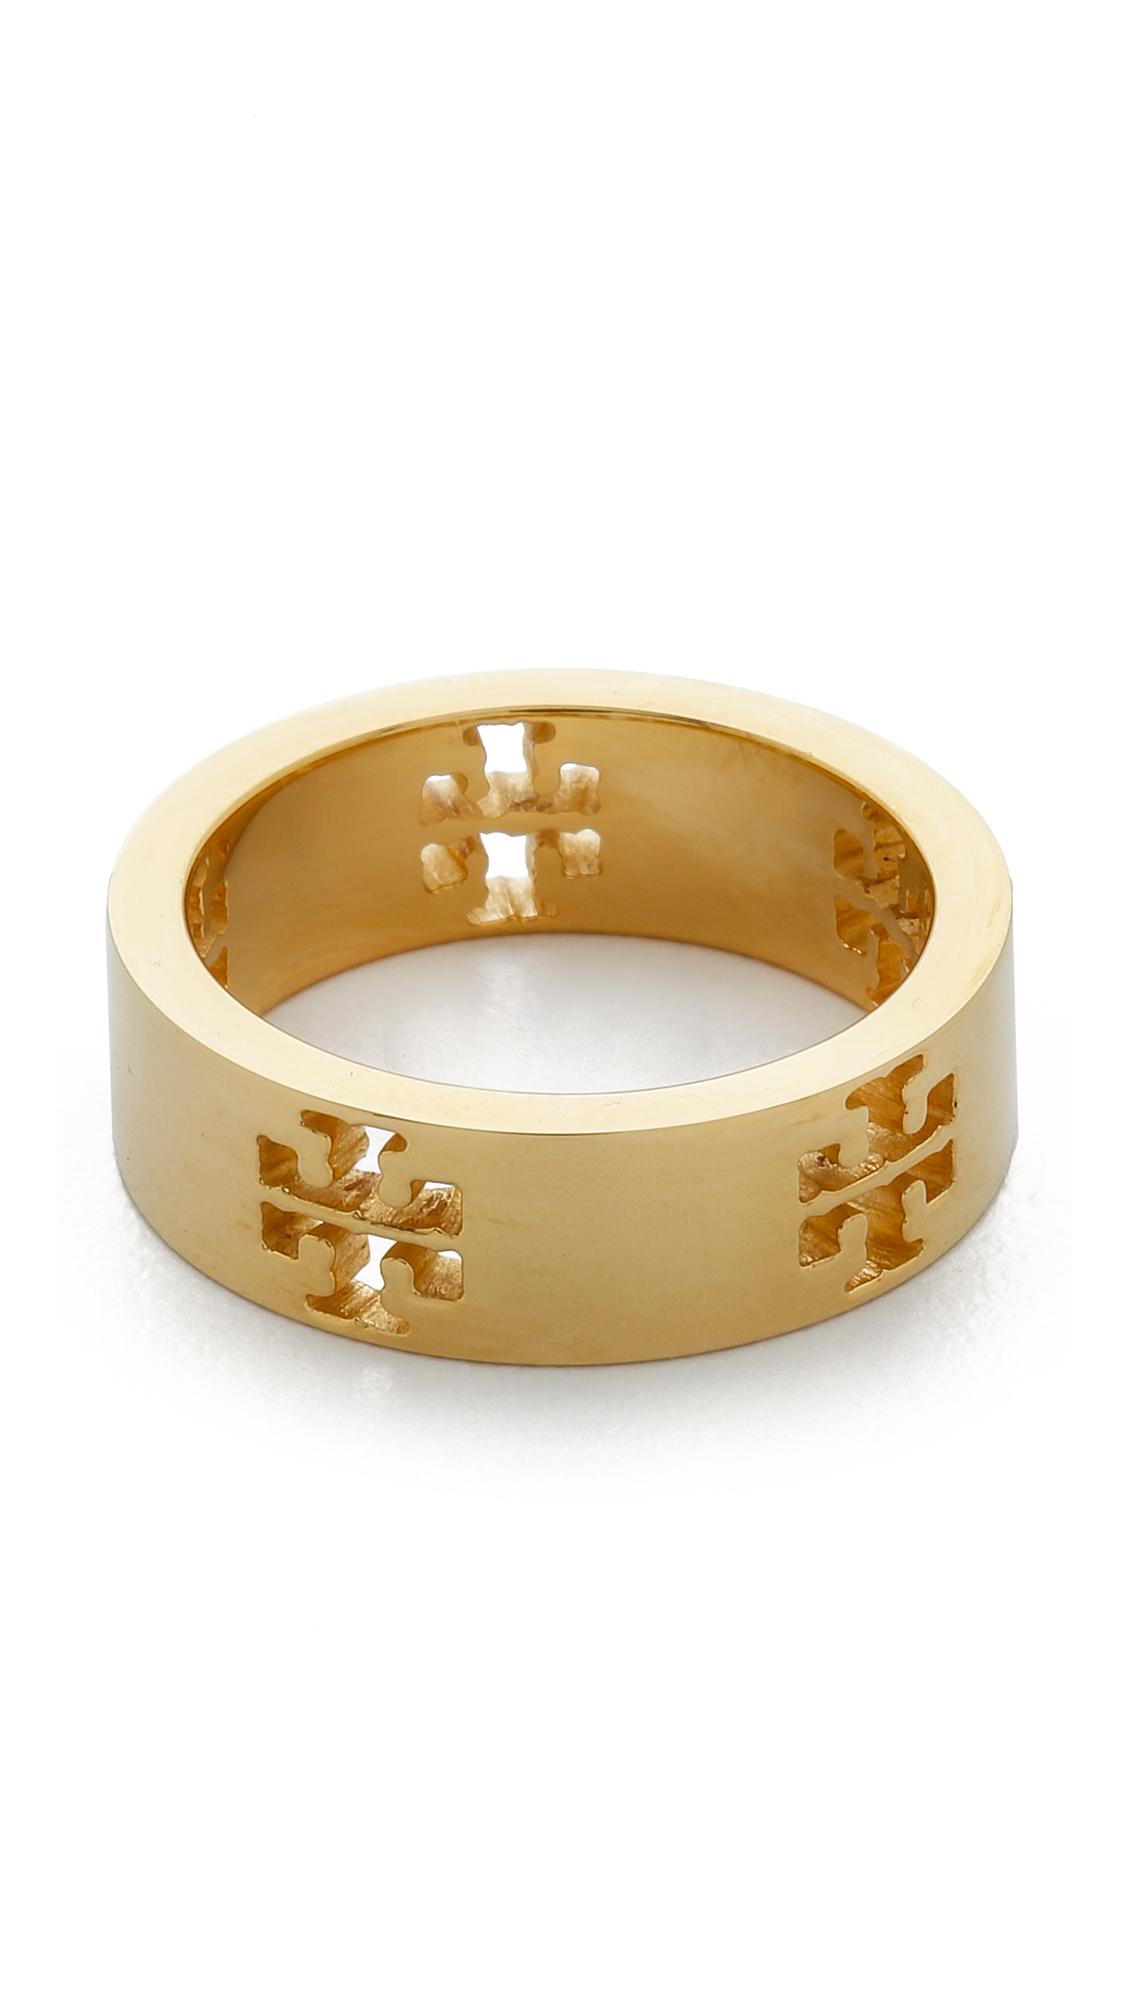 Lyst Tory Burch Pierced T Ring Shiny Gold in Metallic